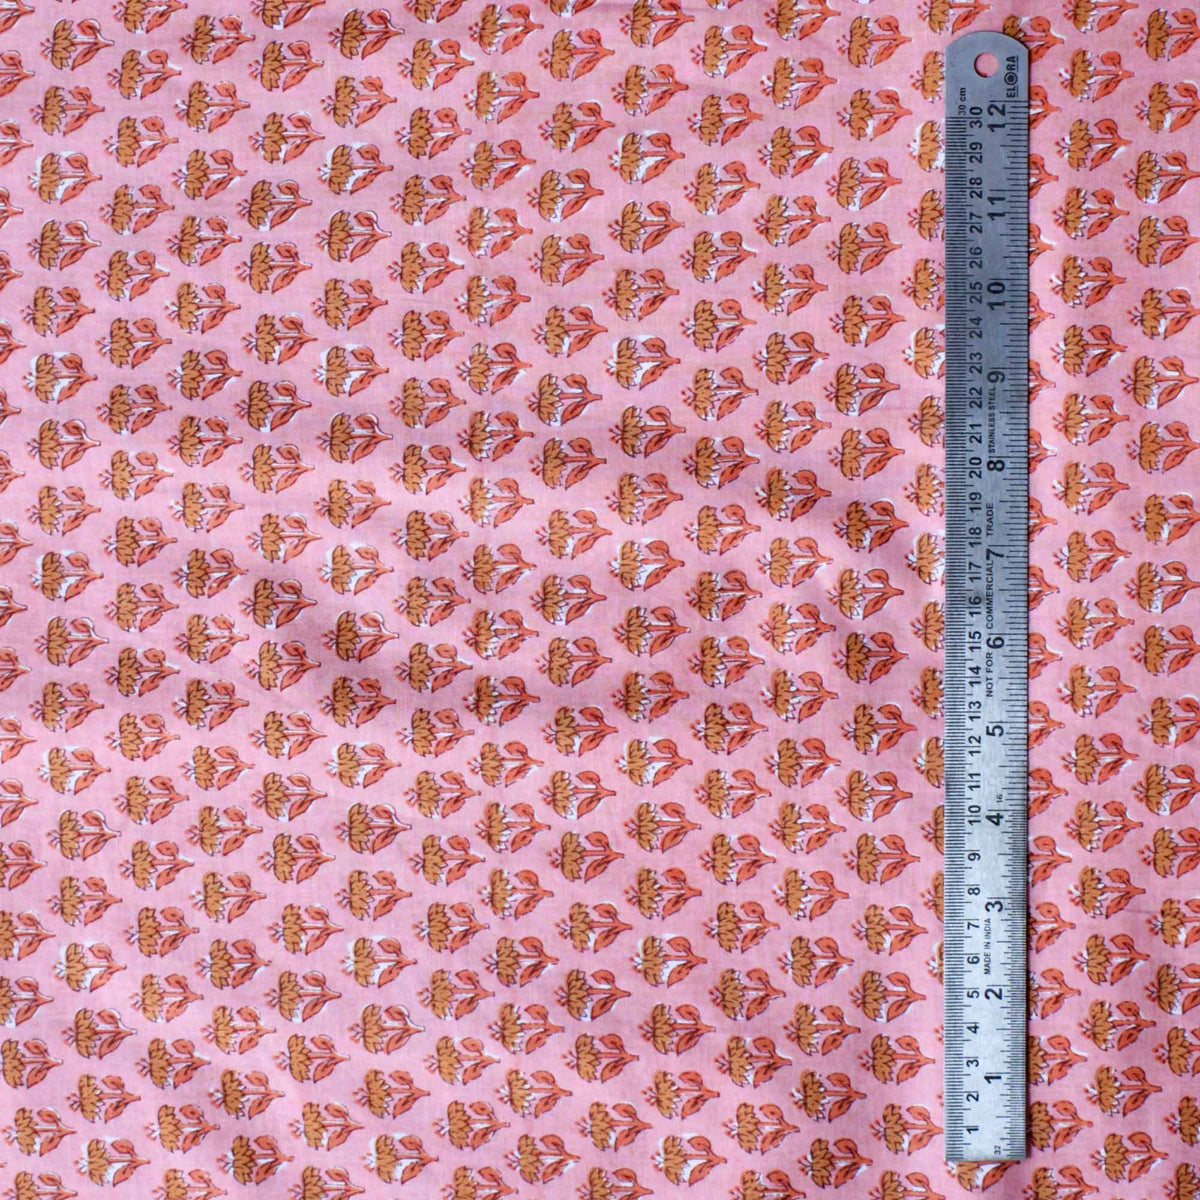 Small Orange Flowers On Pink 100 % Cotton Fabric Design 390